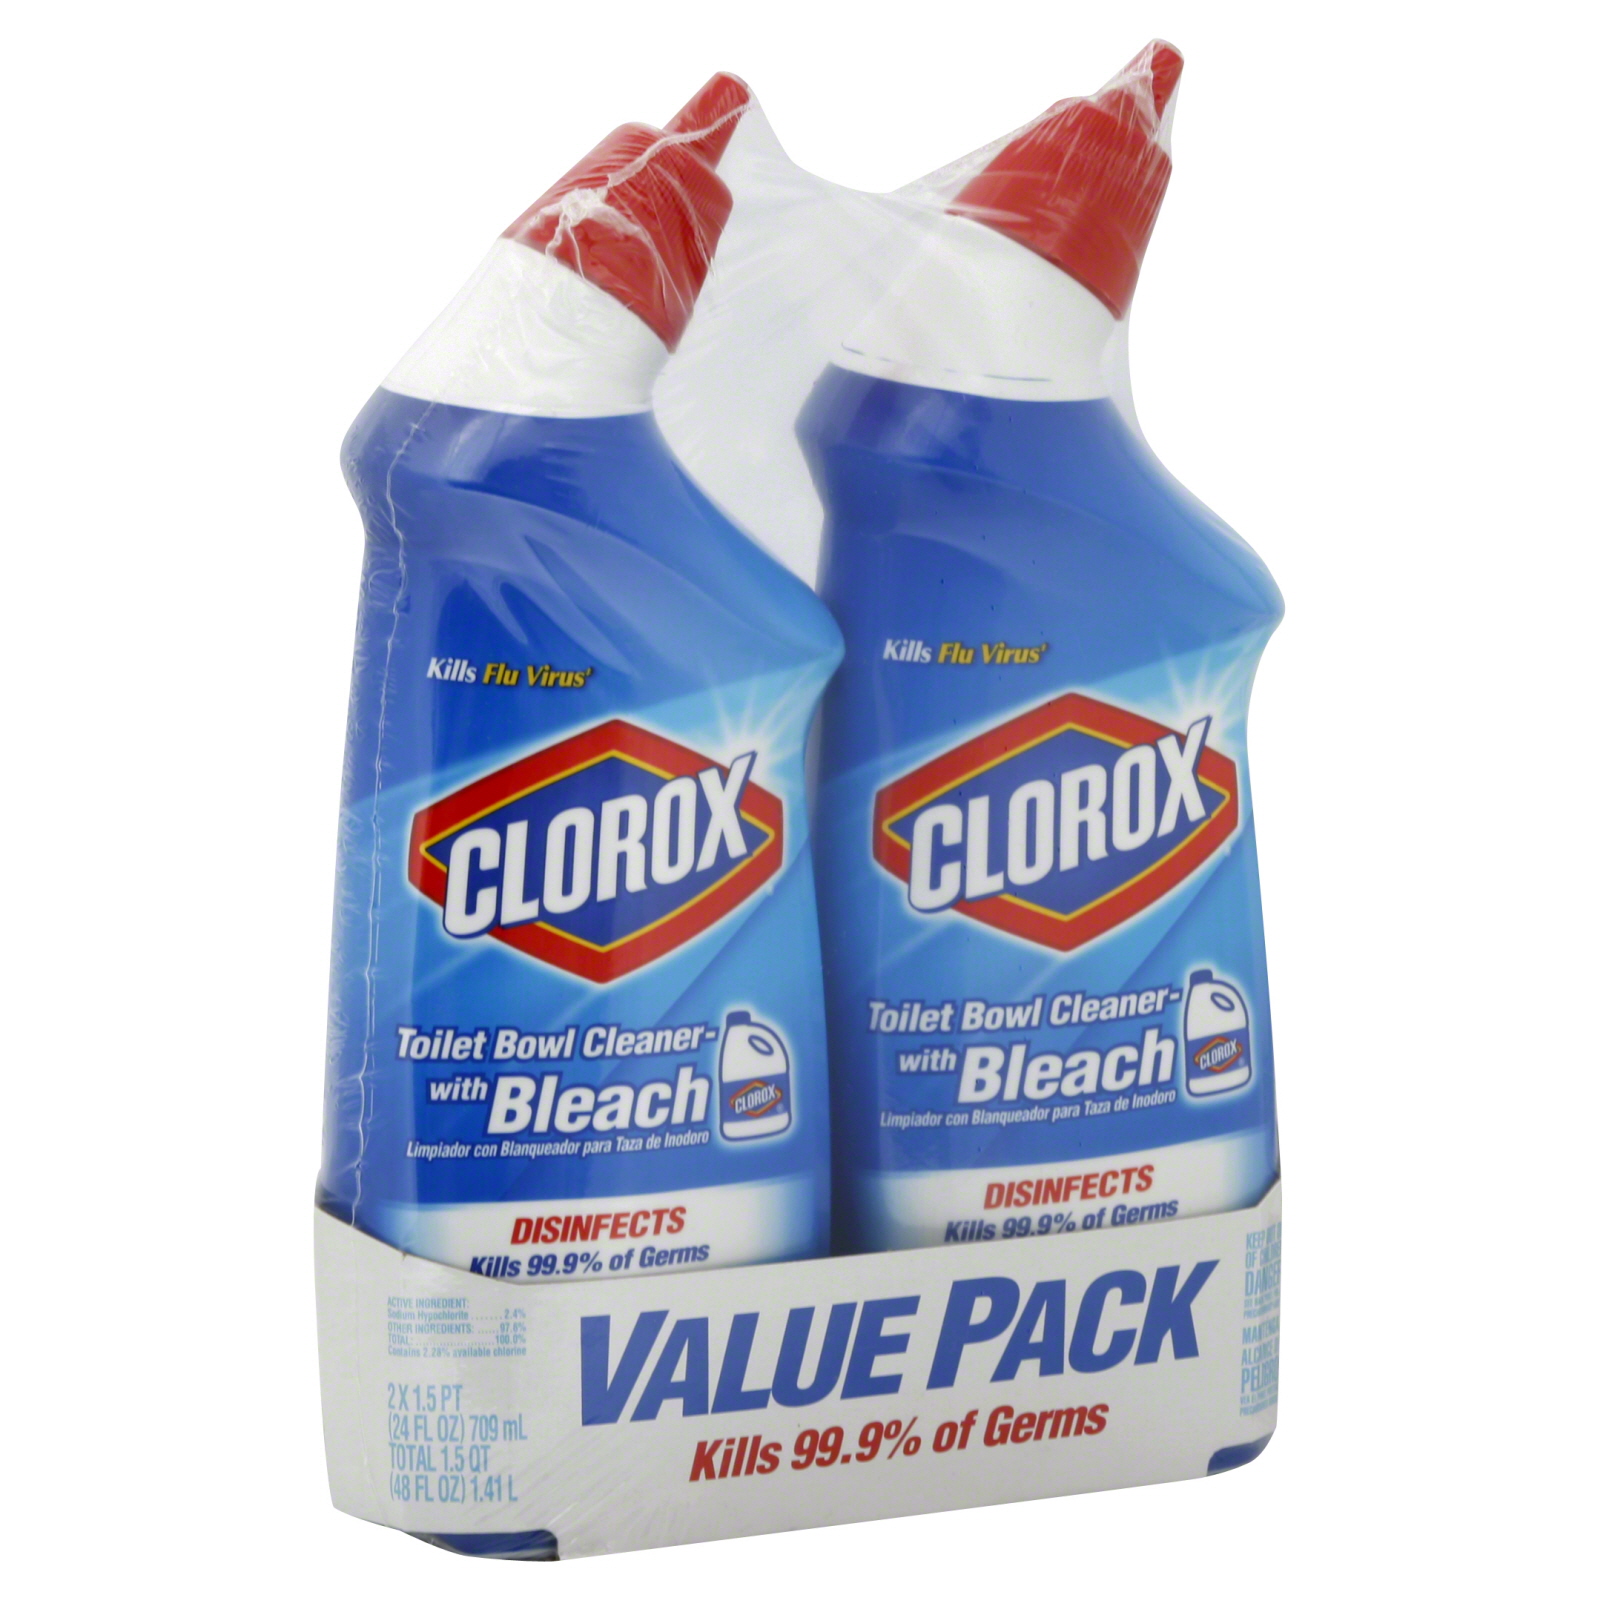 Clorox Toilet Bowl Cleaner, with Bleach, Value Pack, 2 - 24 fl oz (1.5 pt) 709 ml bottles [48 fl oz]